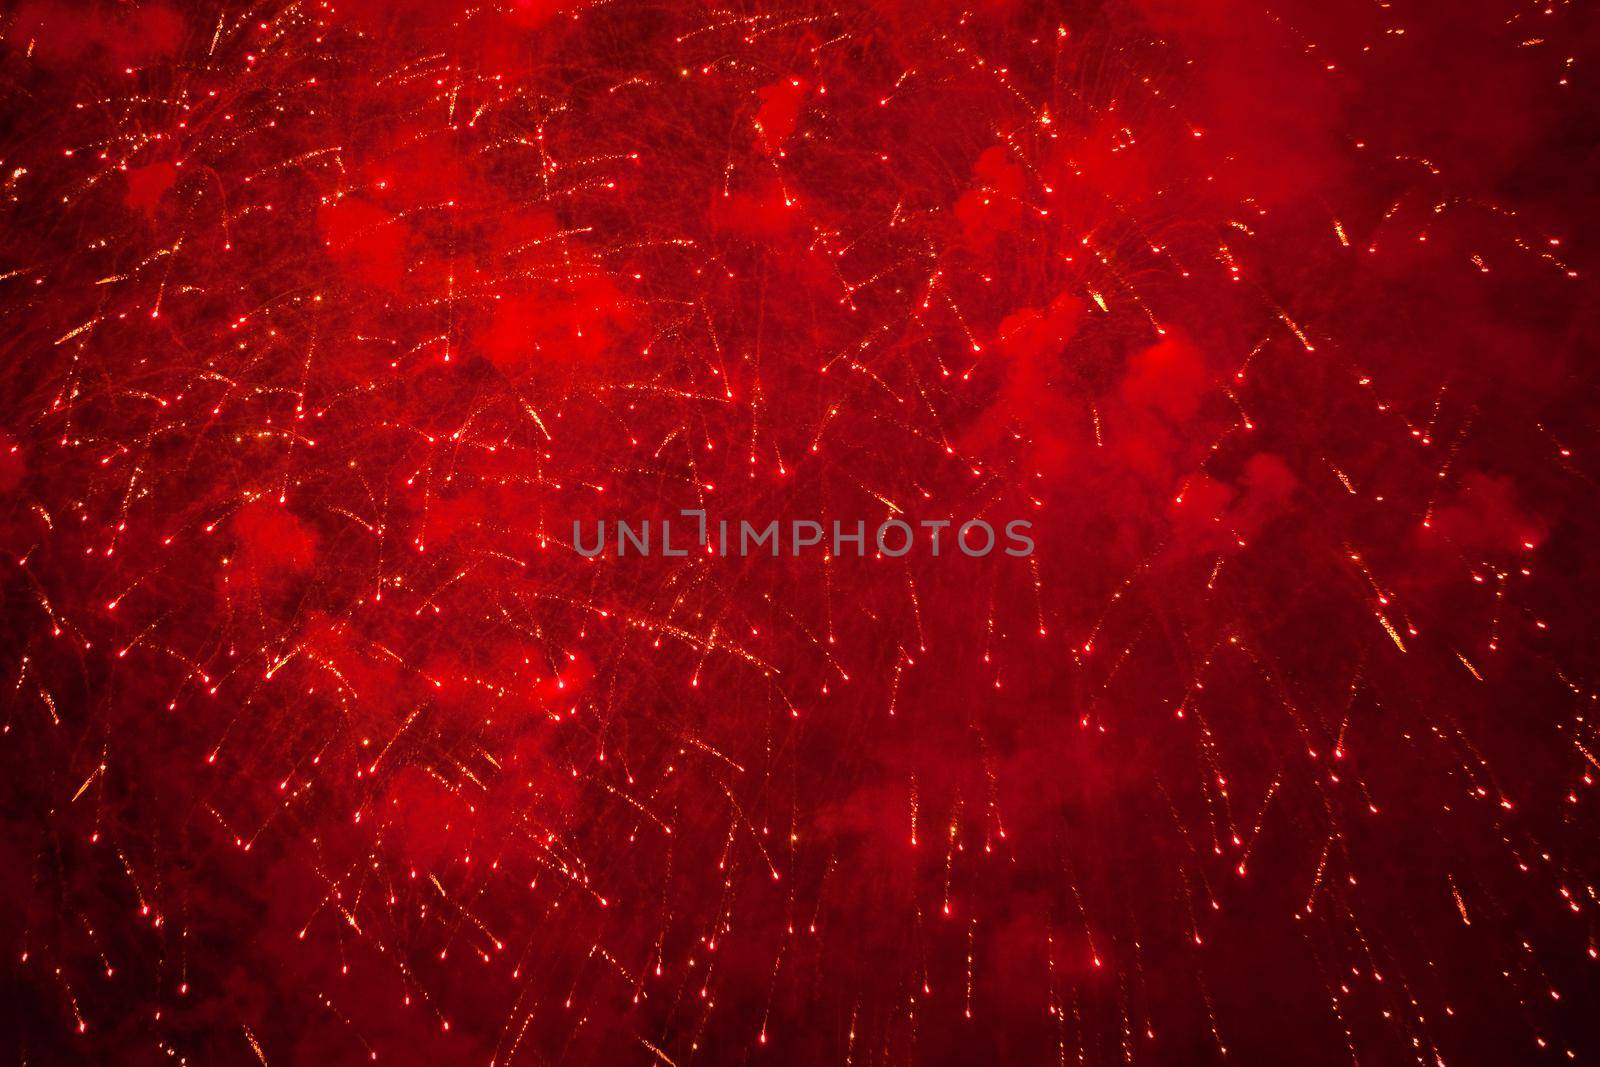 Red and orange sparks of fireworks in the dark sky by TashaRo